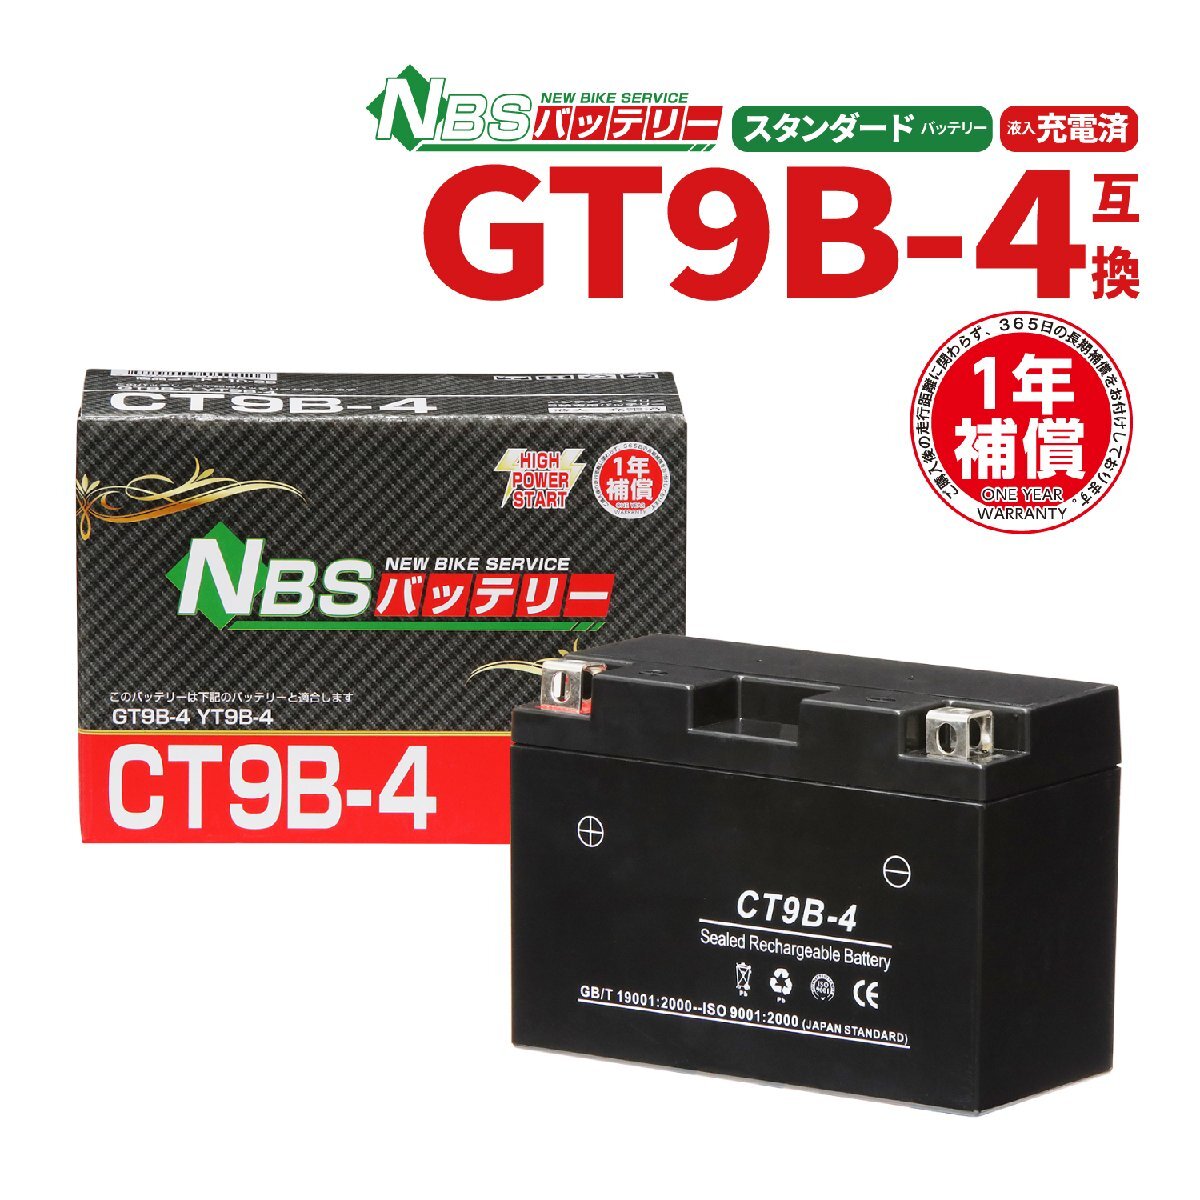 GT9B-4 YT9B-BS互換 CT9B-4 バイクバッテリー 1年間保証付き 新品 バイクパーツセンター 1025a_画像1